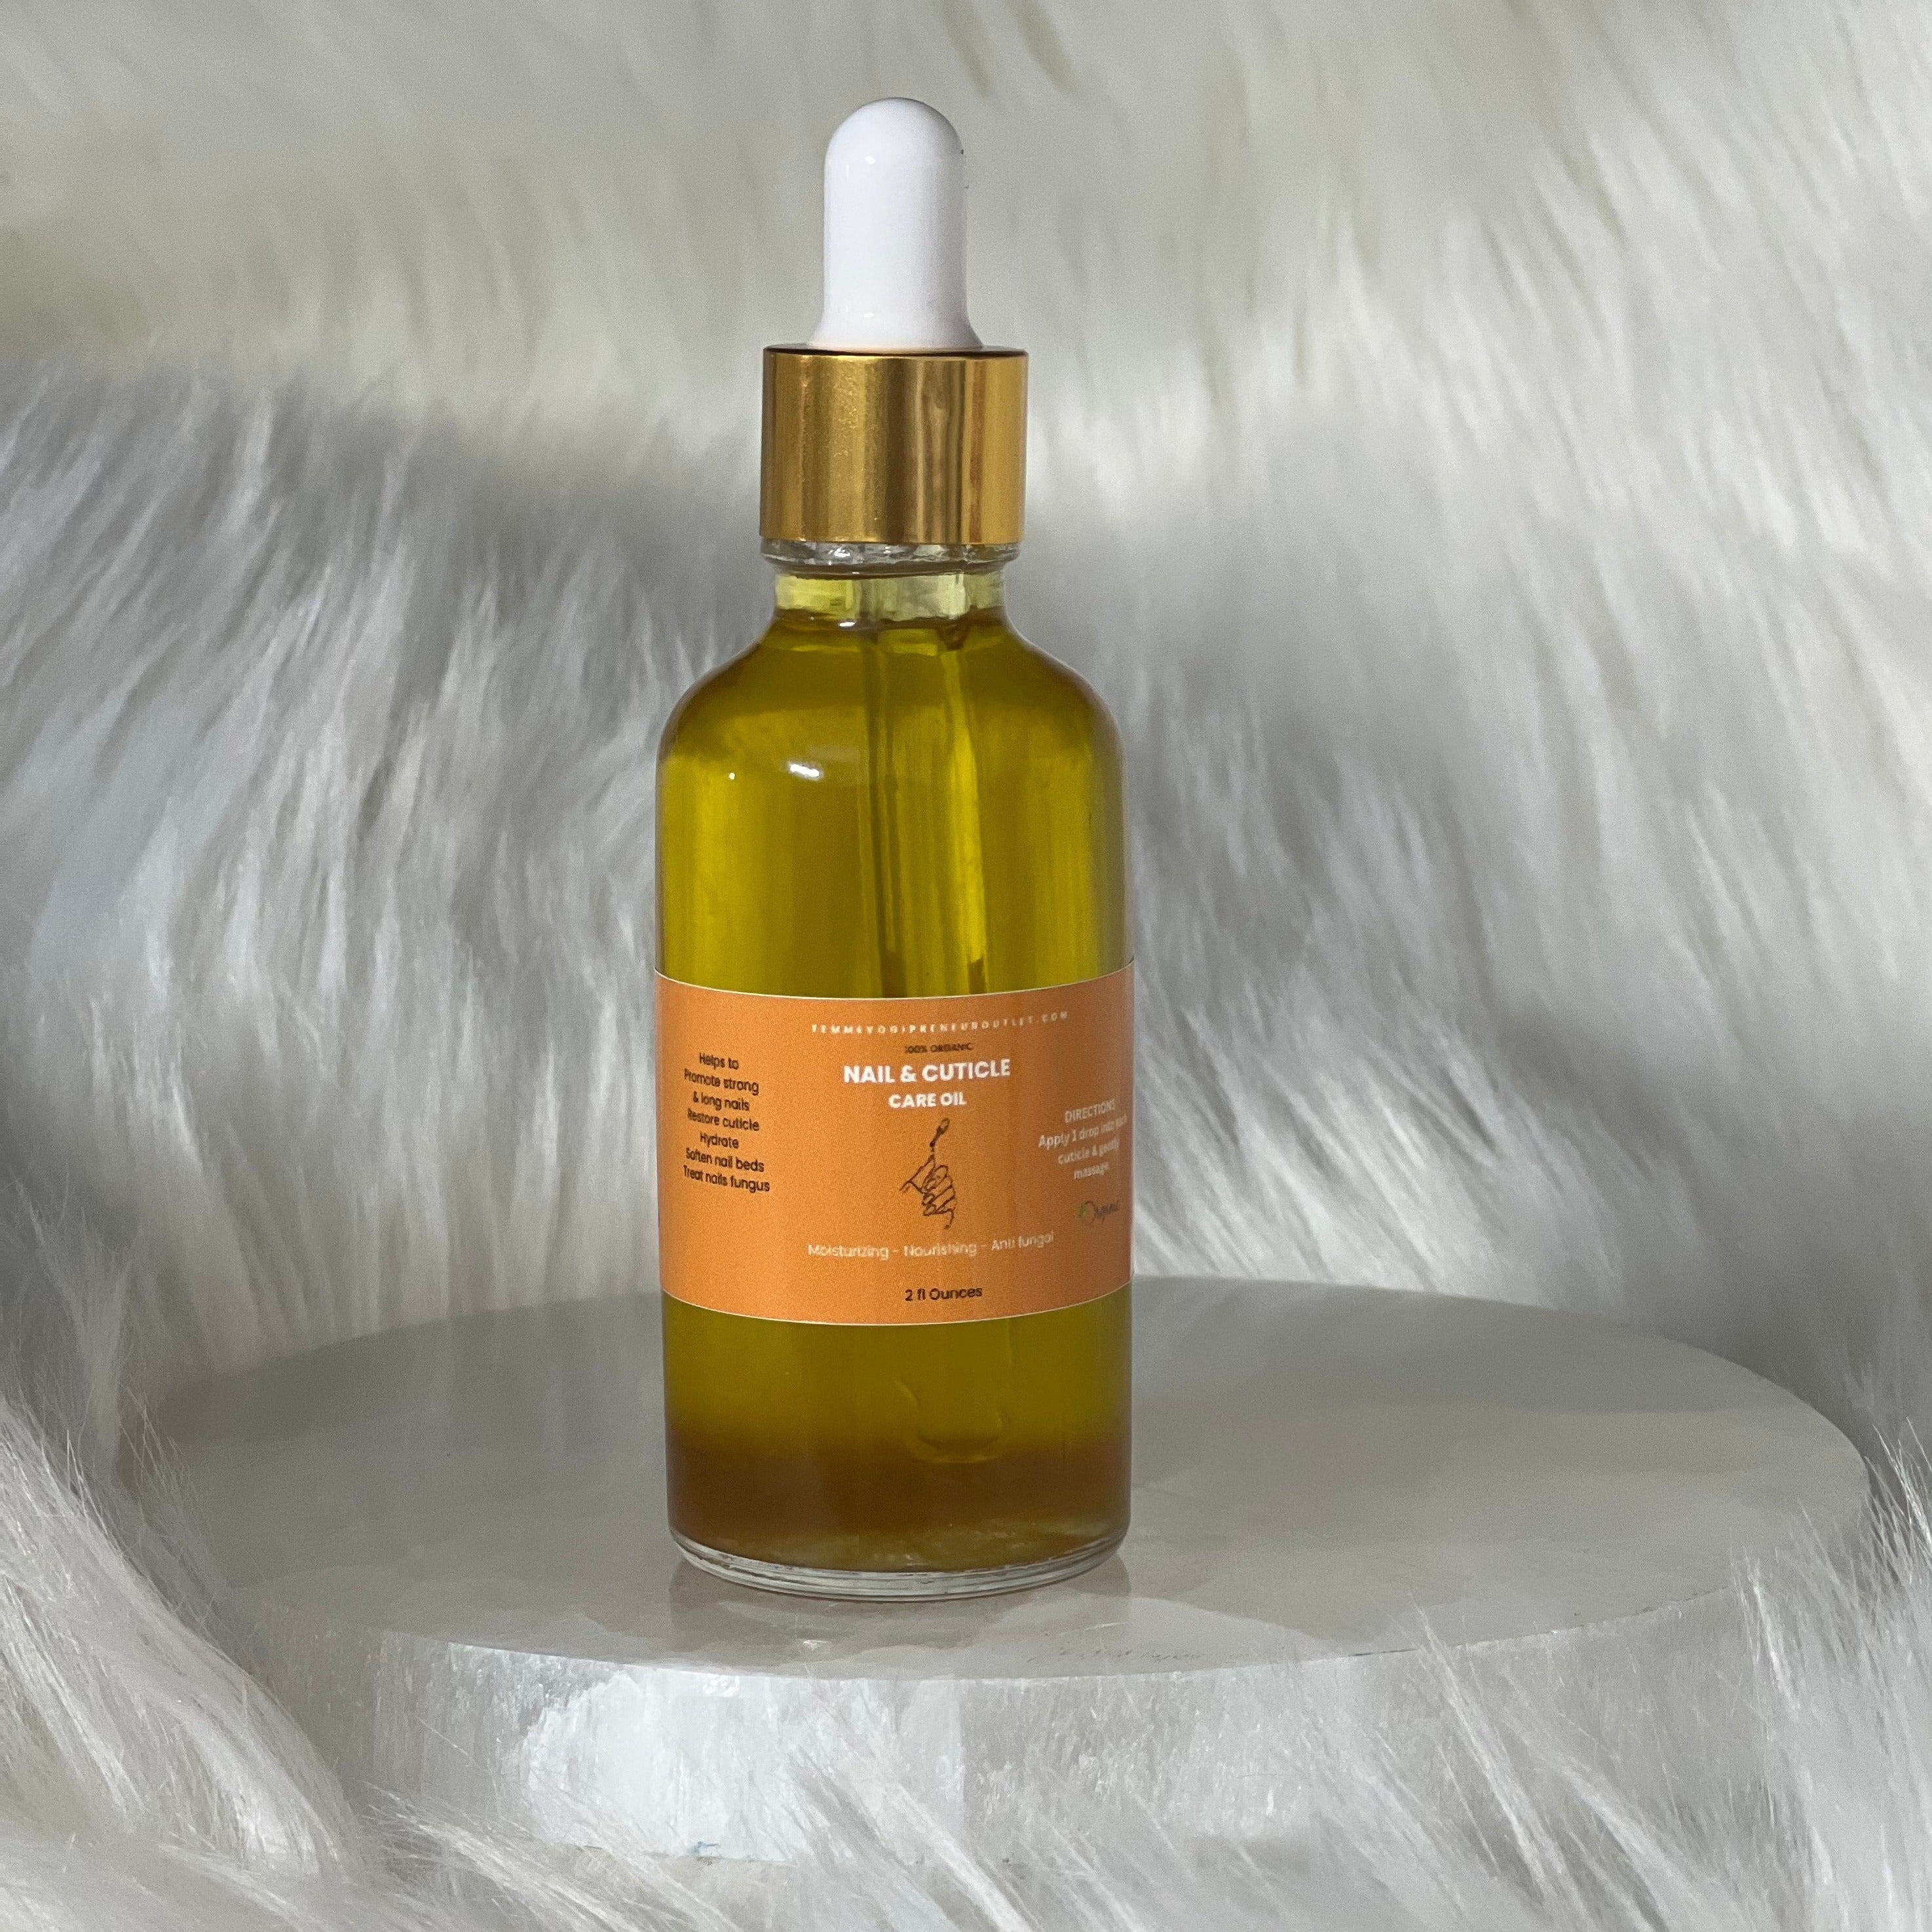 Nail & Cuticle Care Oil - Lavender scented